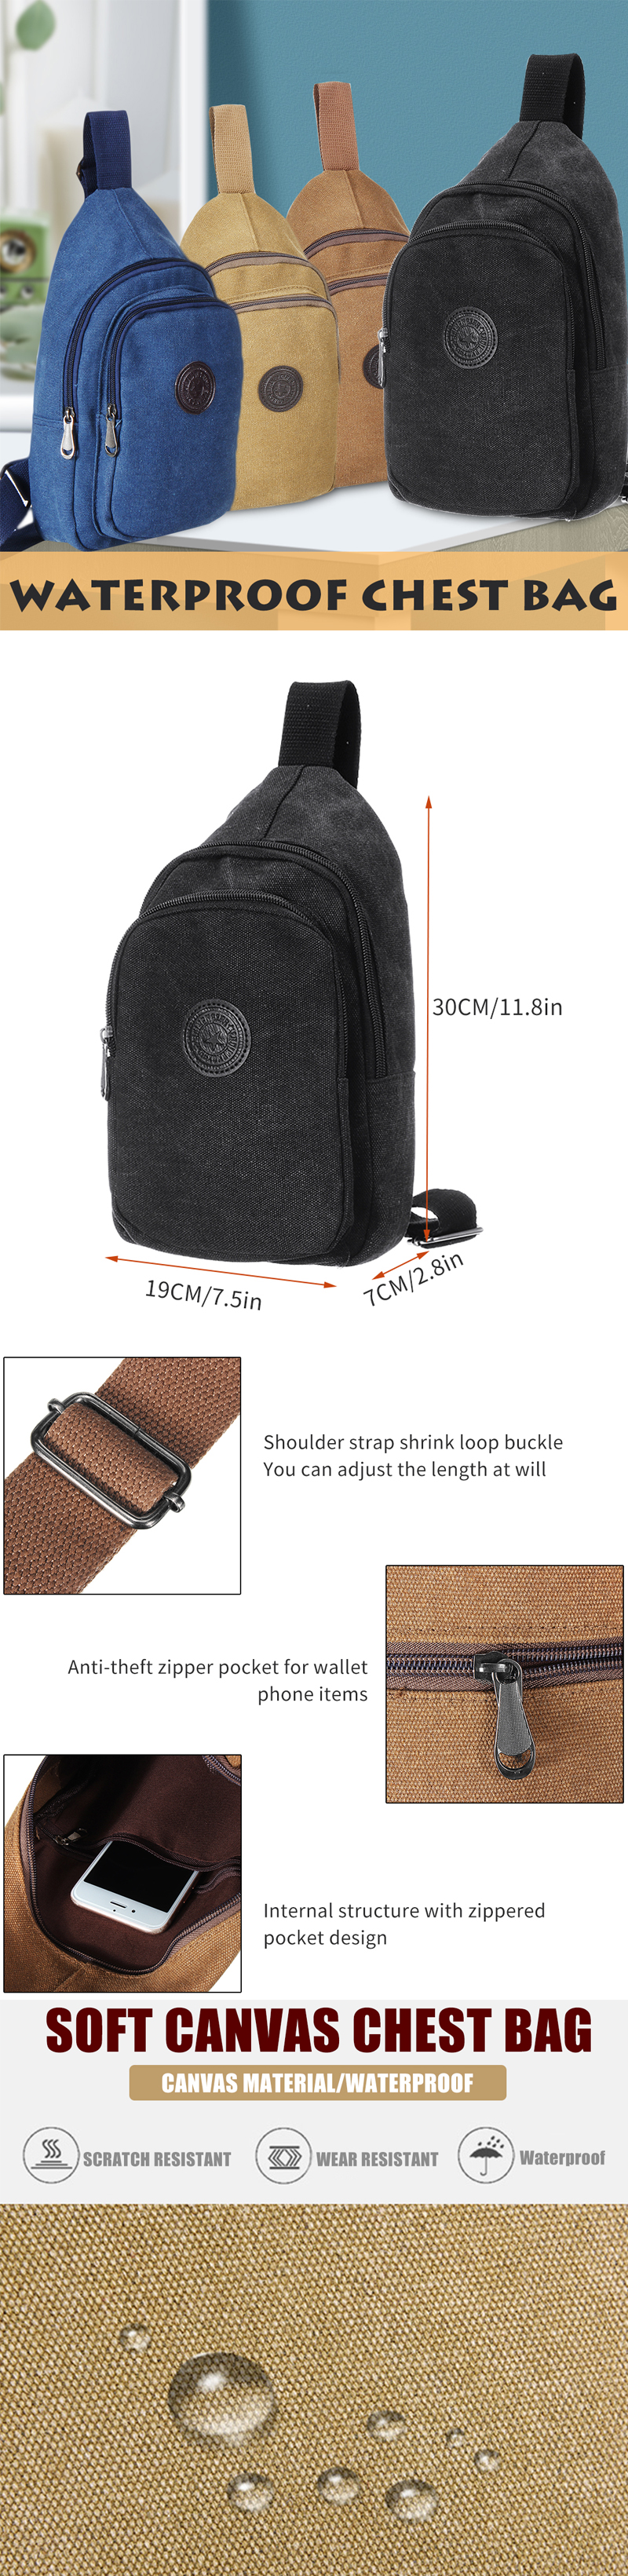 Canvas-Chest-Bag-Multi-Function-Men-Crossbody-Bag-Shoulder-Bag-Leisure-Travel-1555982-1